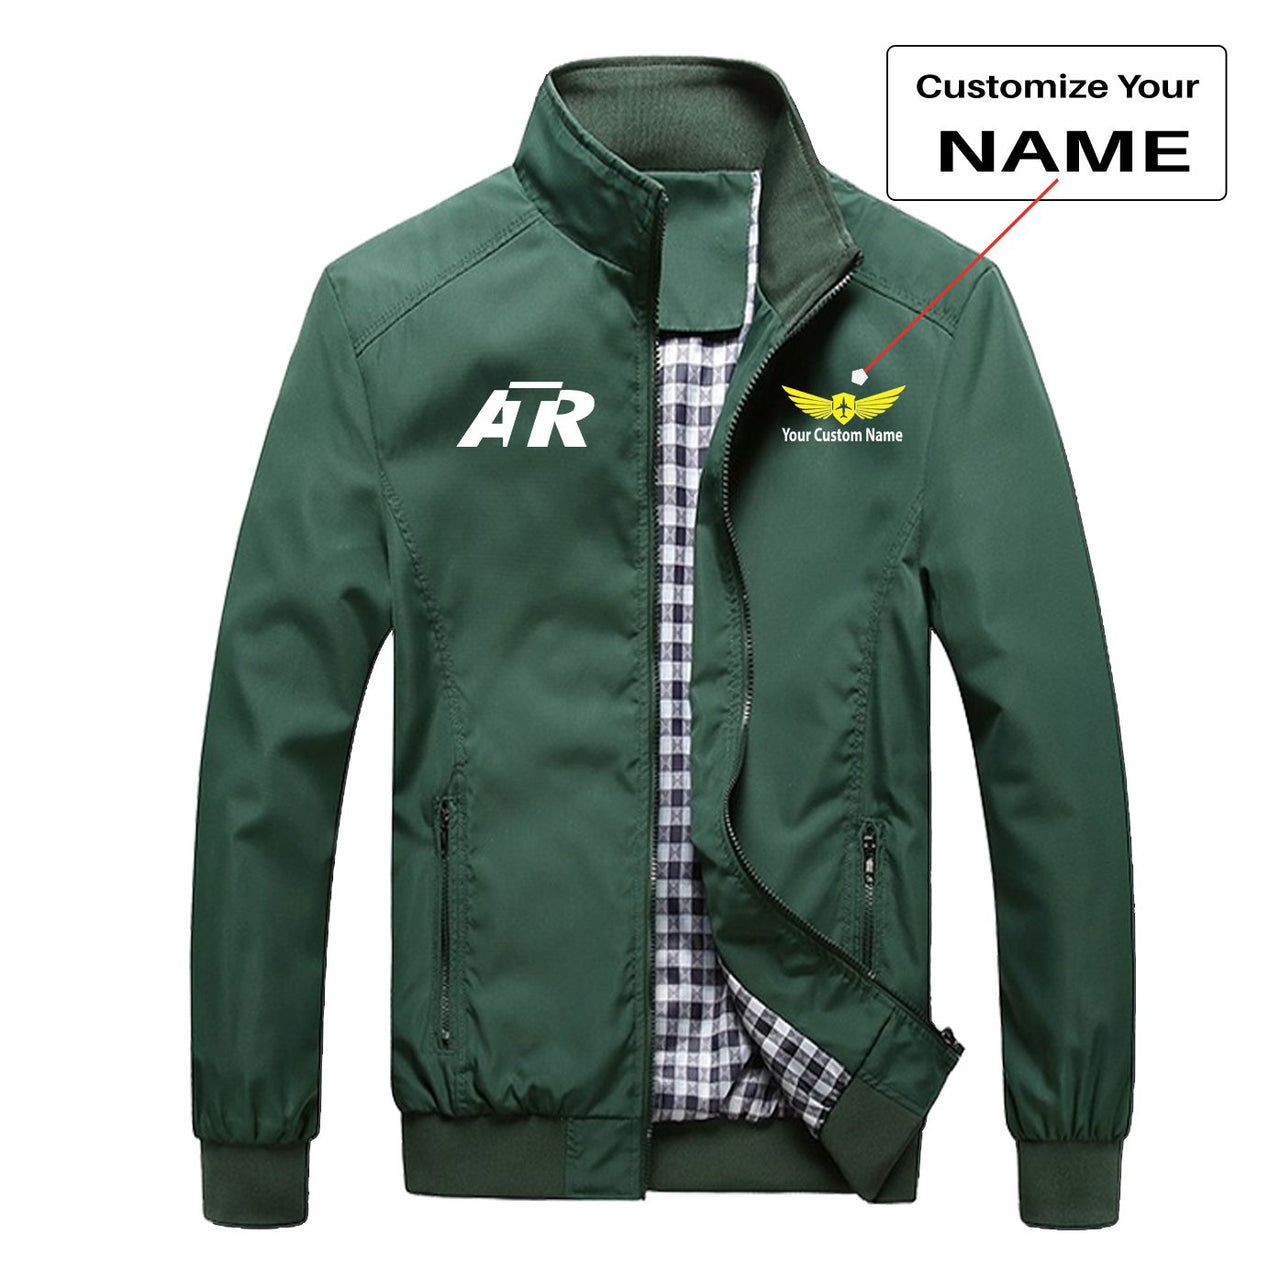 ATR & Text Designed Stylish Jackets